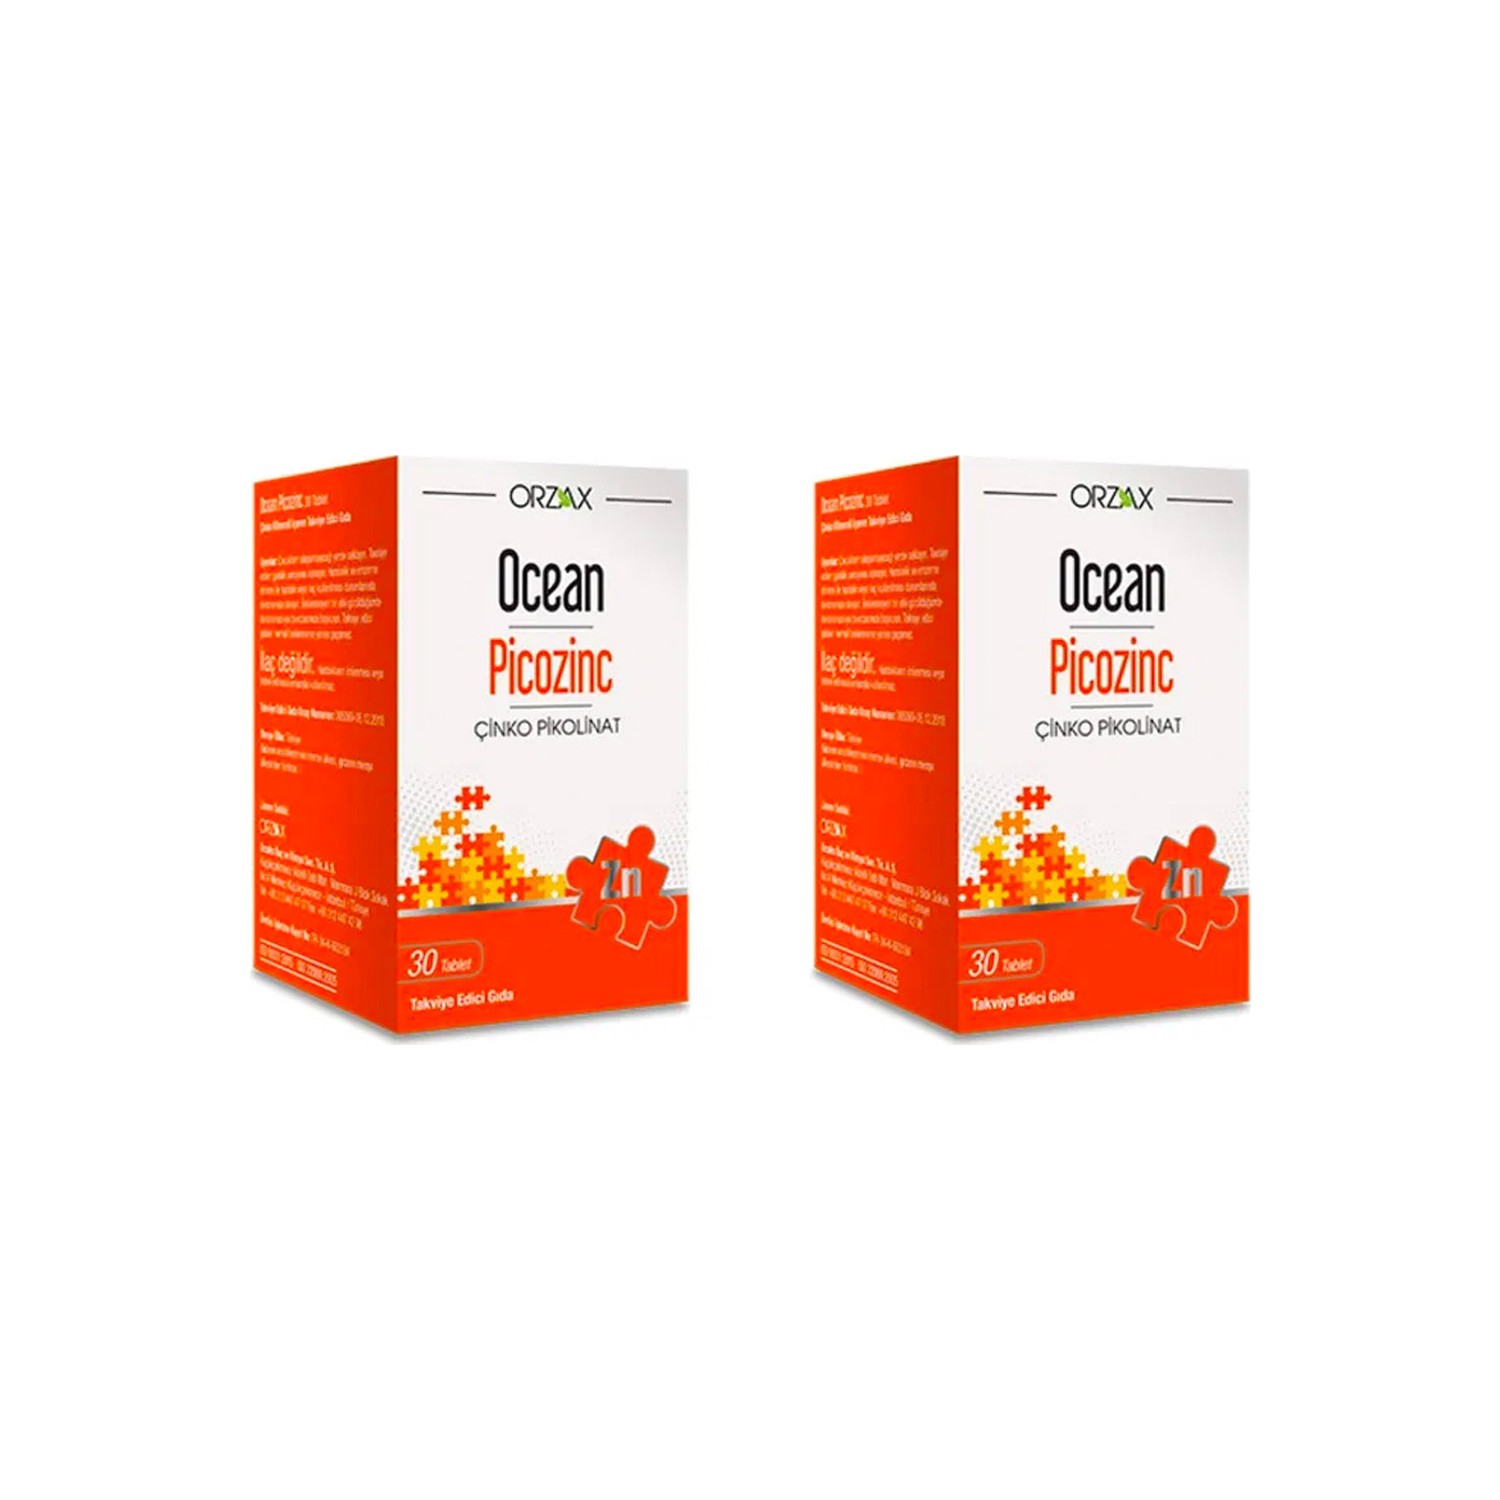 Пищевая добавка Orzax Ocean Picozinc Cinko Picolinate, 2 упаковки по 30 таблеток пищевая добавка orzax ocean picozinc cinko picolinate 2 упаковки по 30 таблеток